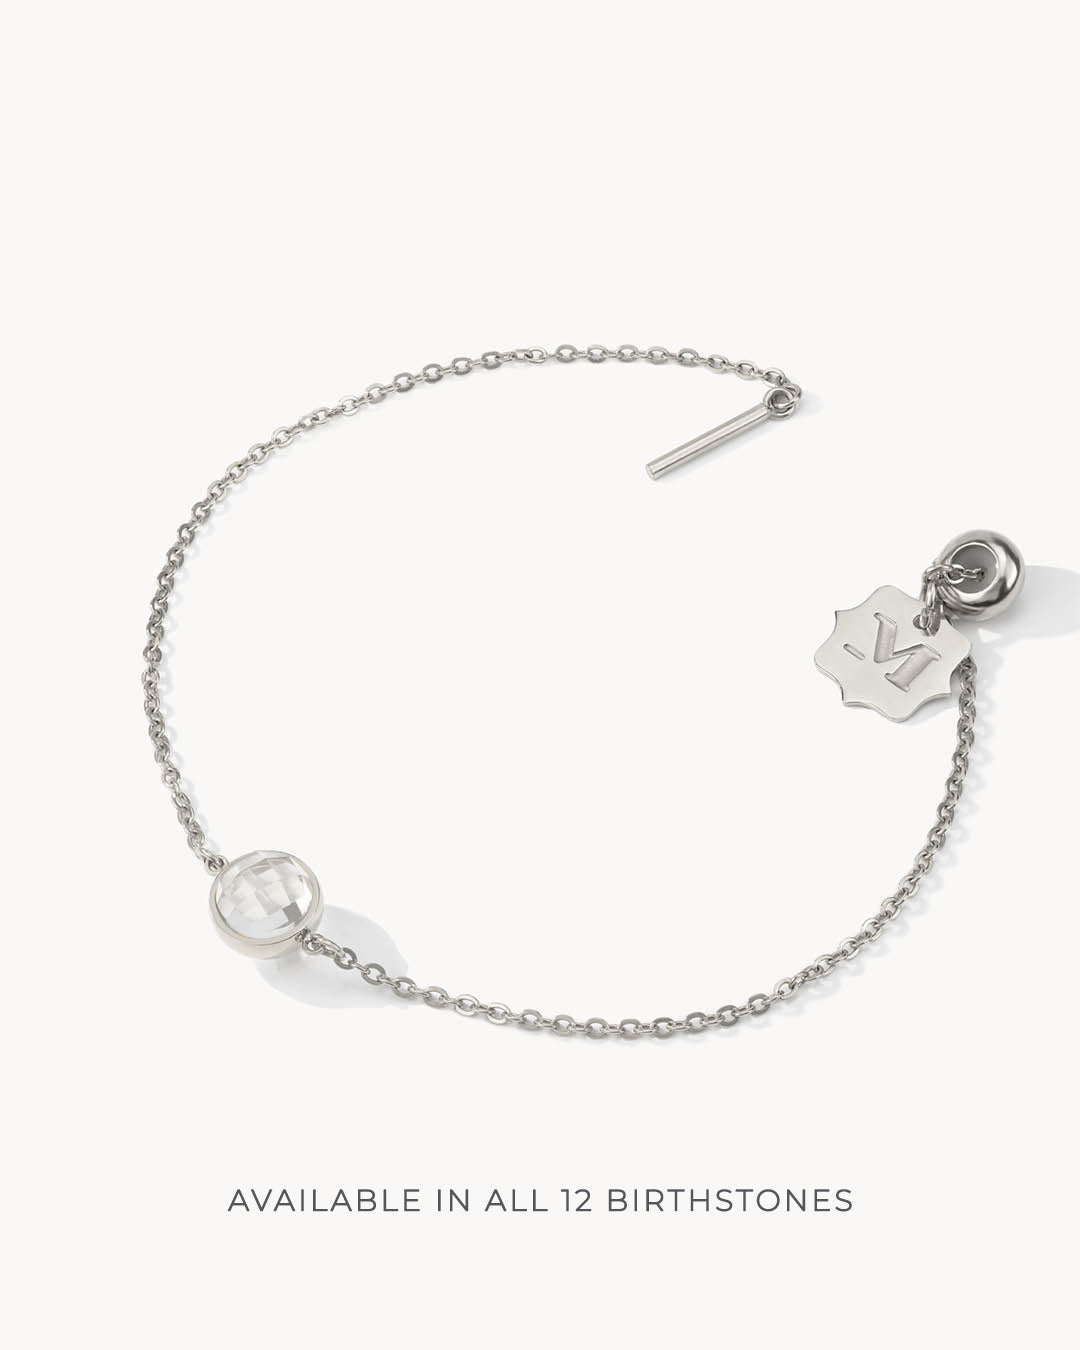   Birthstone Signature Bracelet Set, Silver